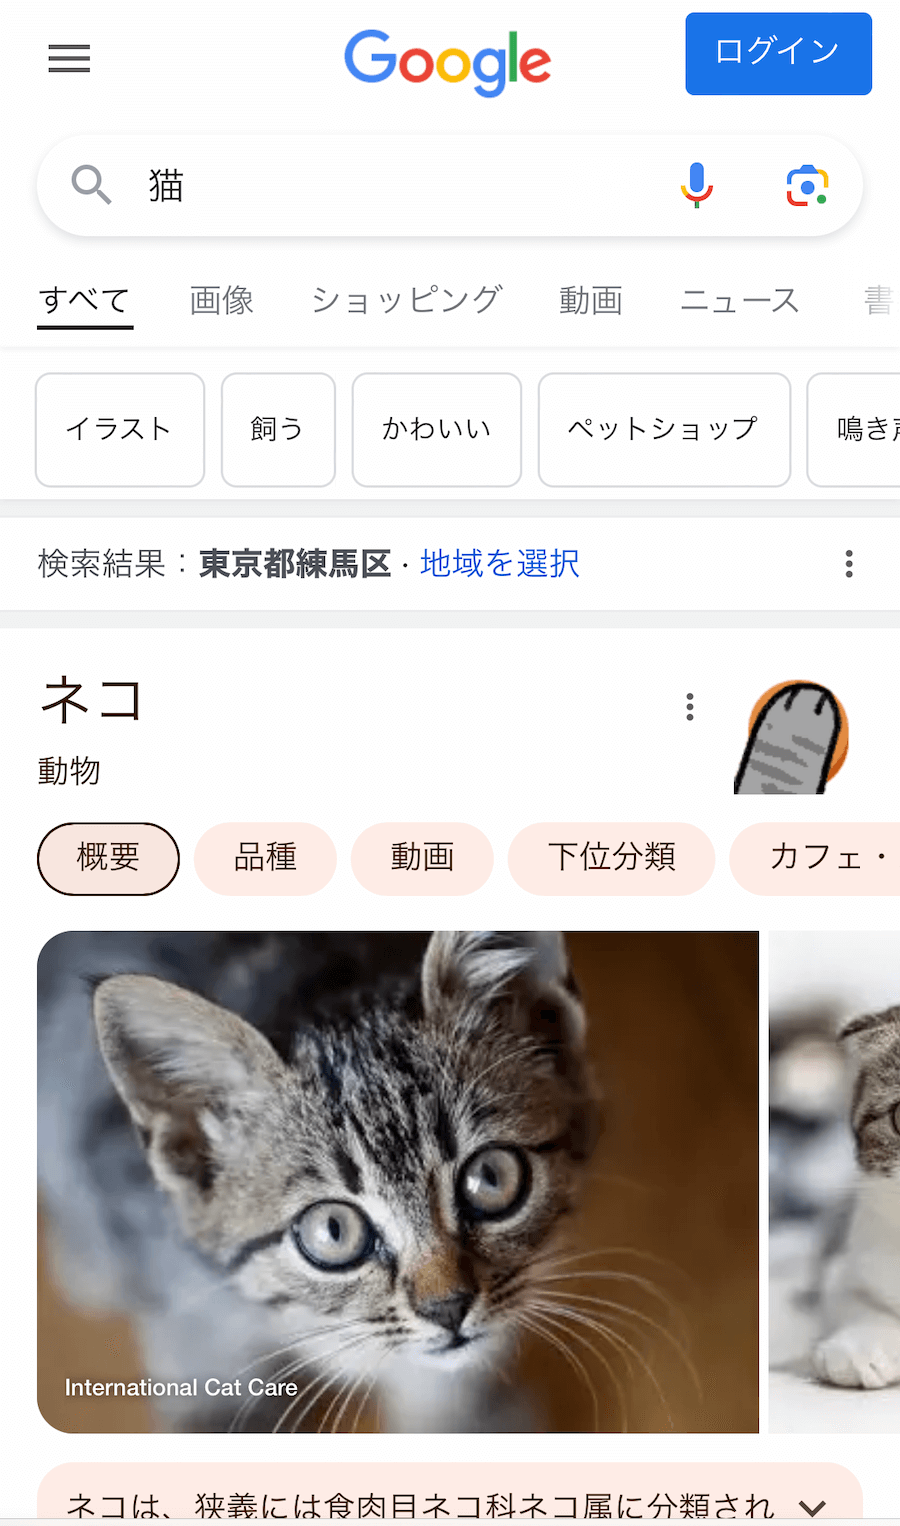 Googleの「猫」検索画面で肉球マークが押される演出